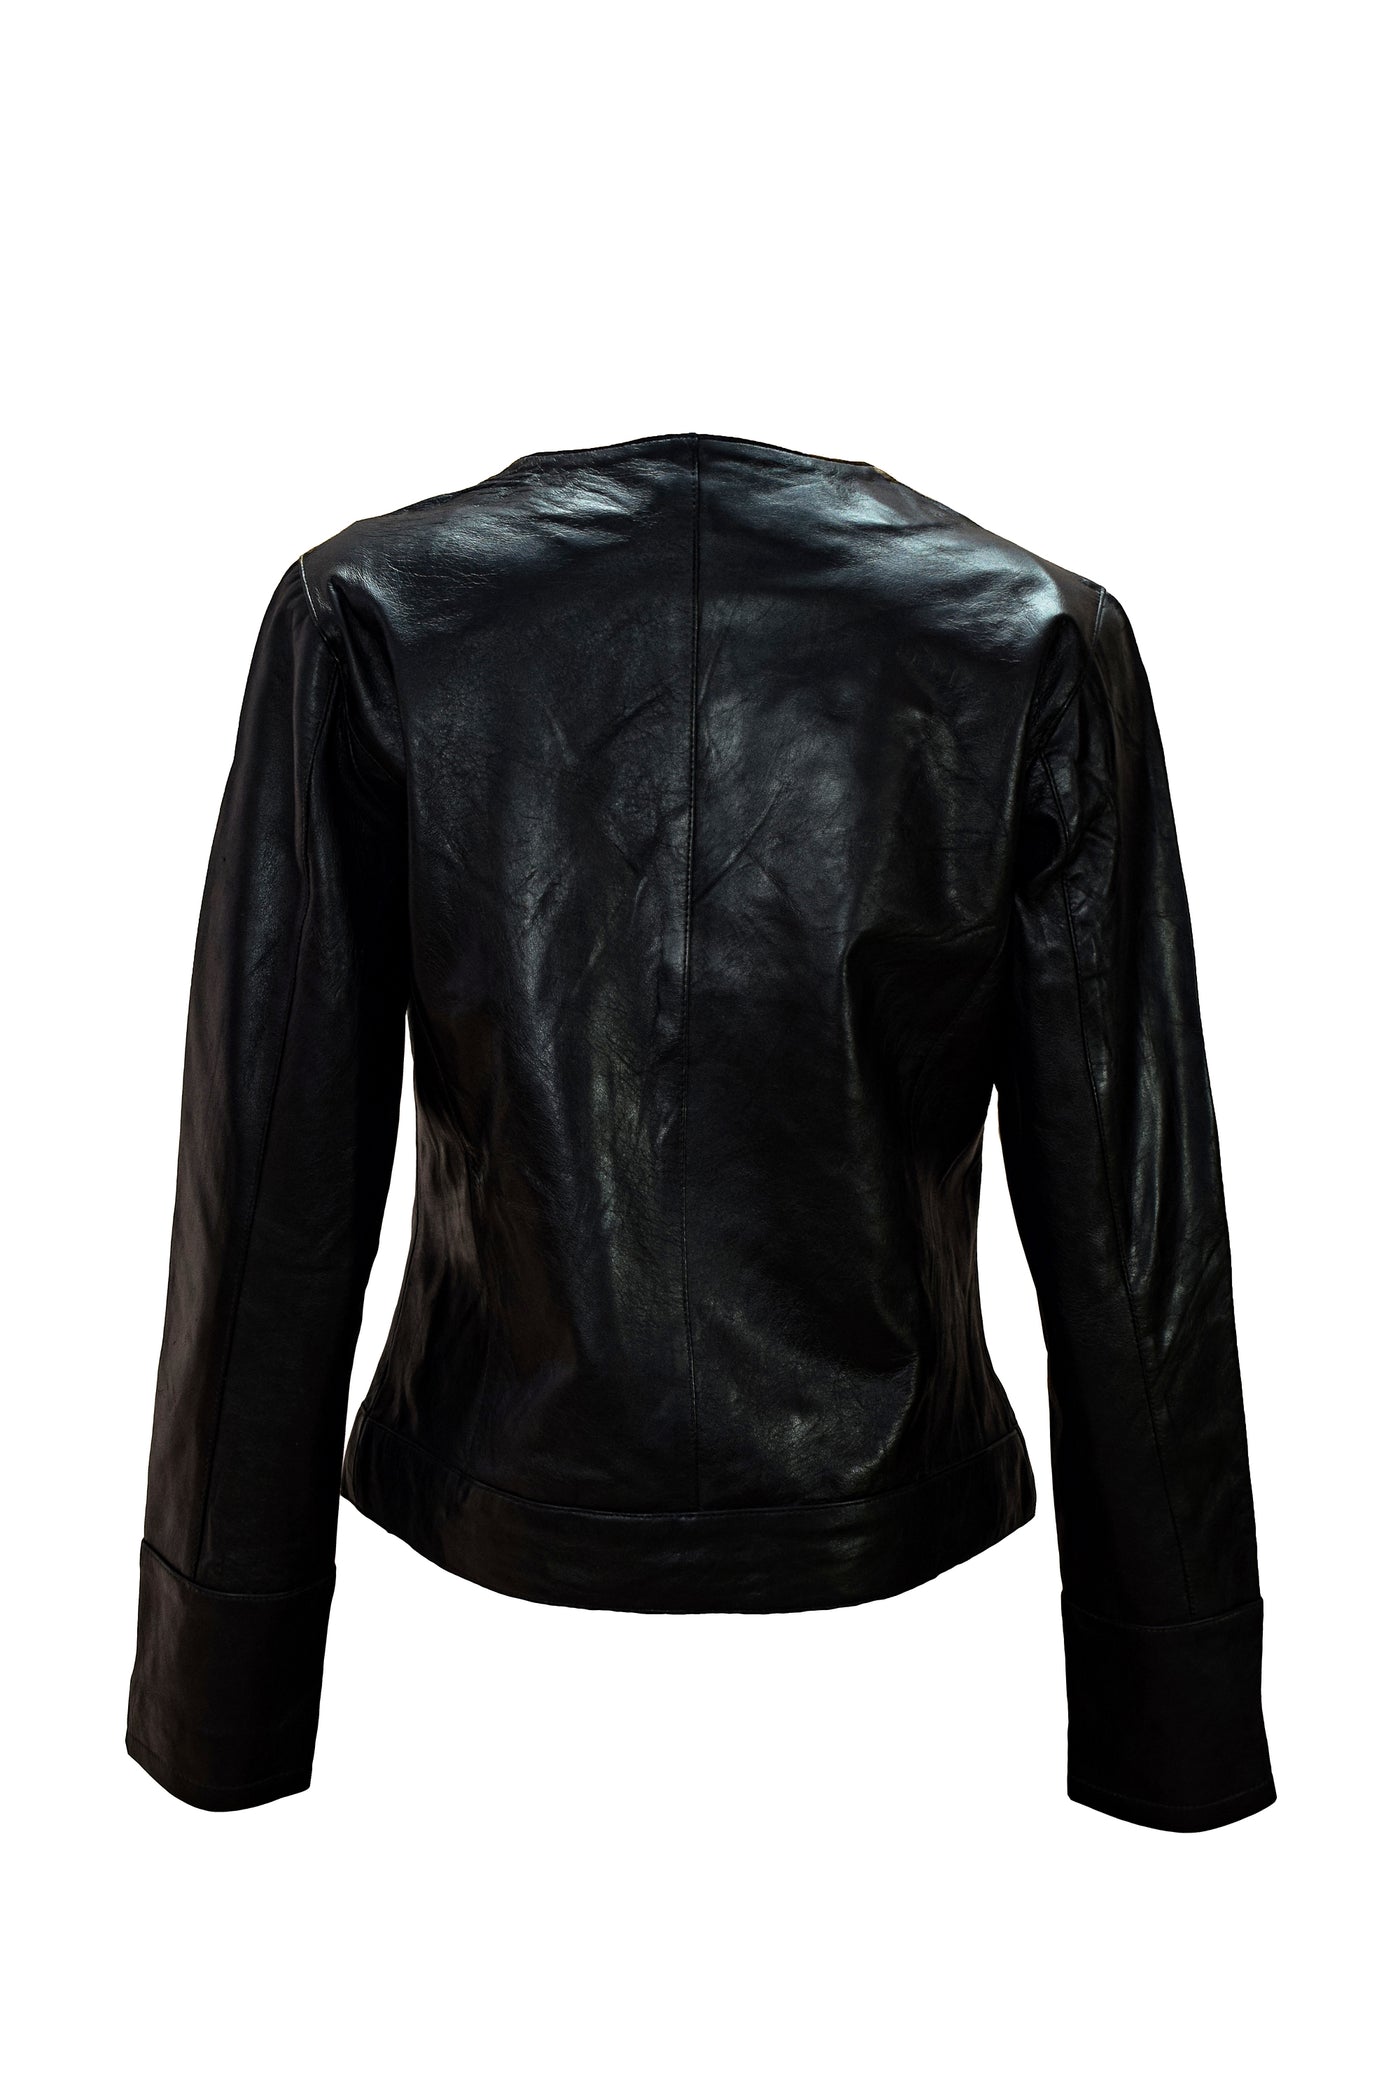 Symmetric Black Leather Jacket For Sale